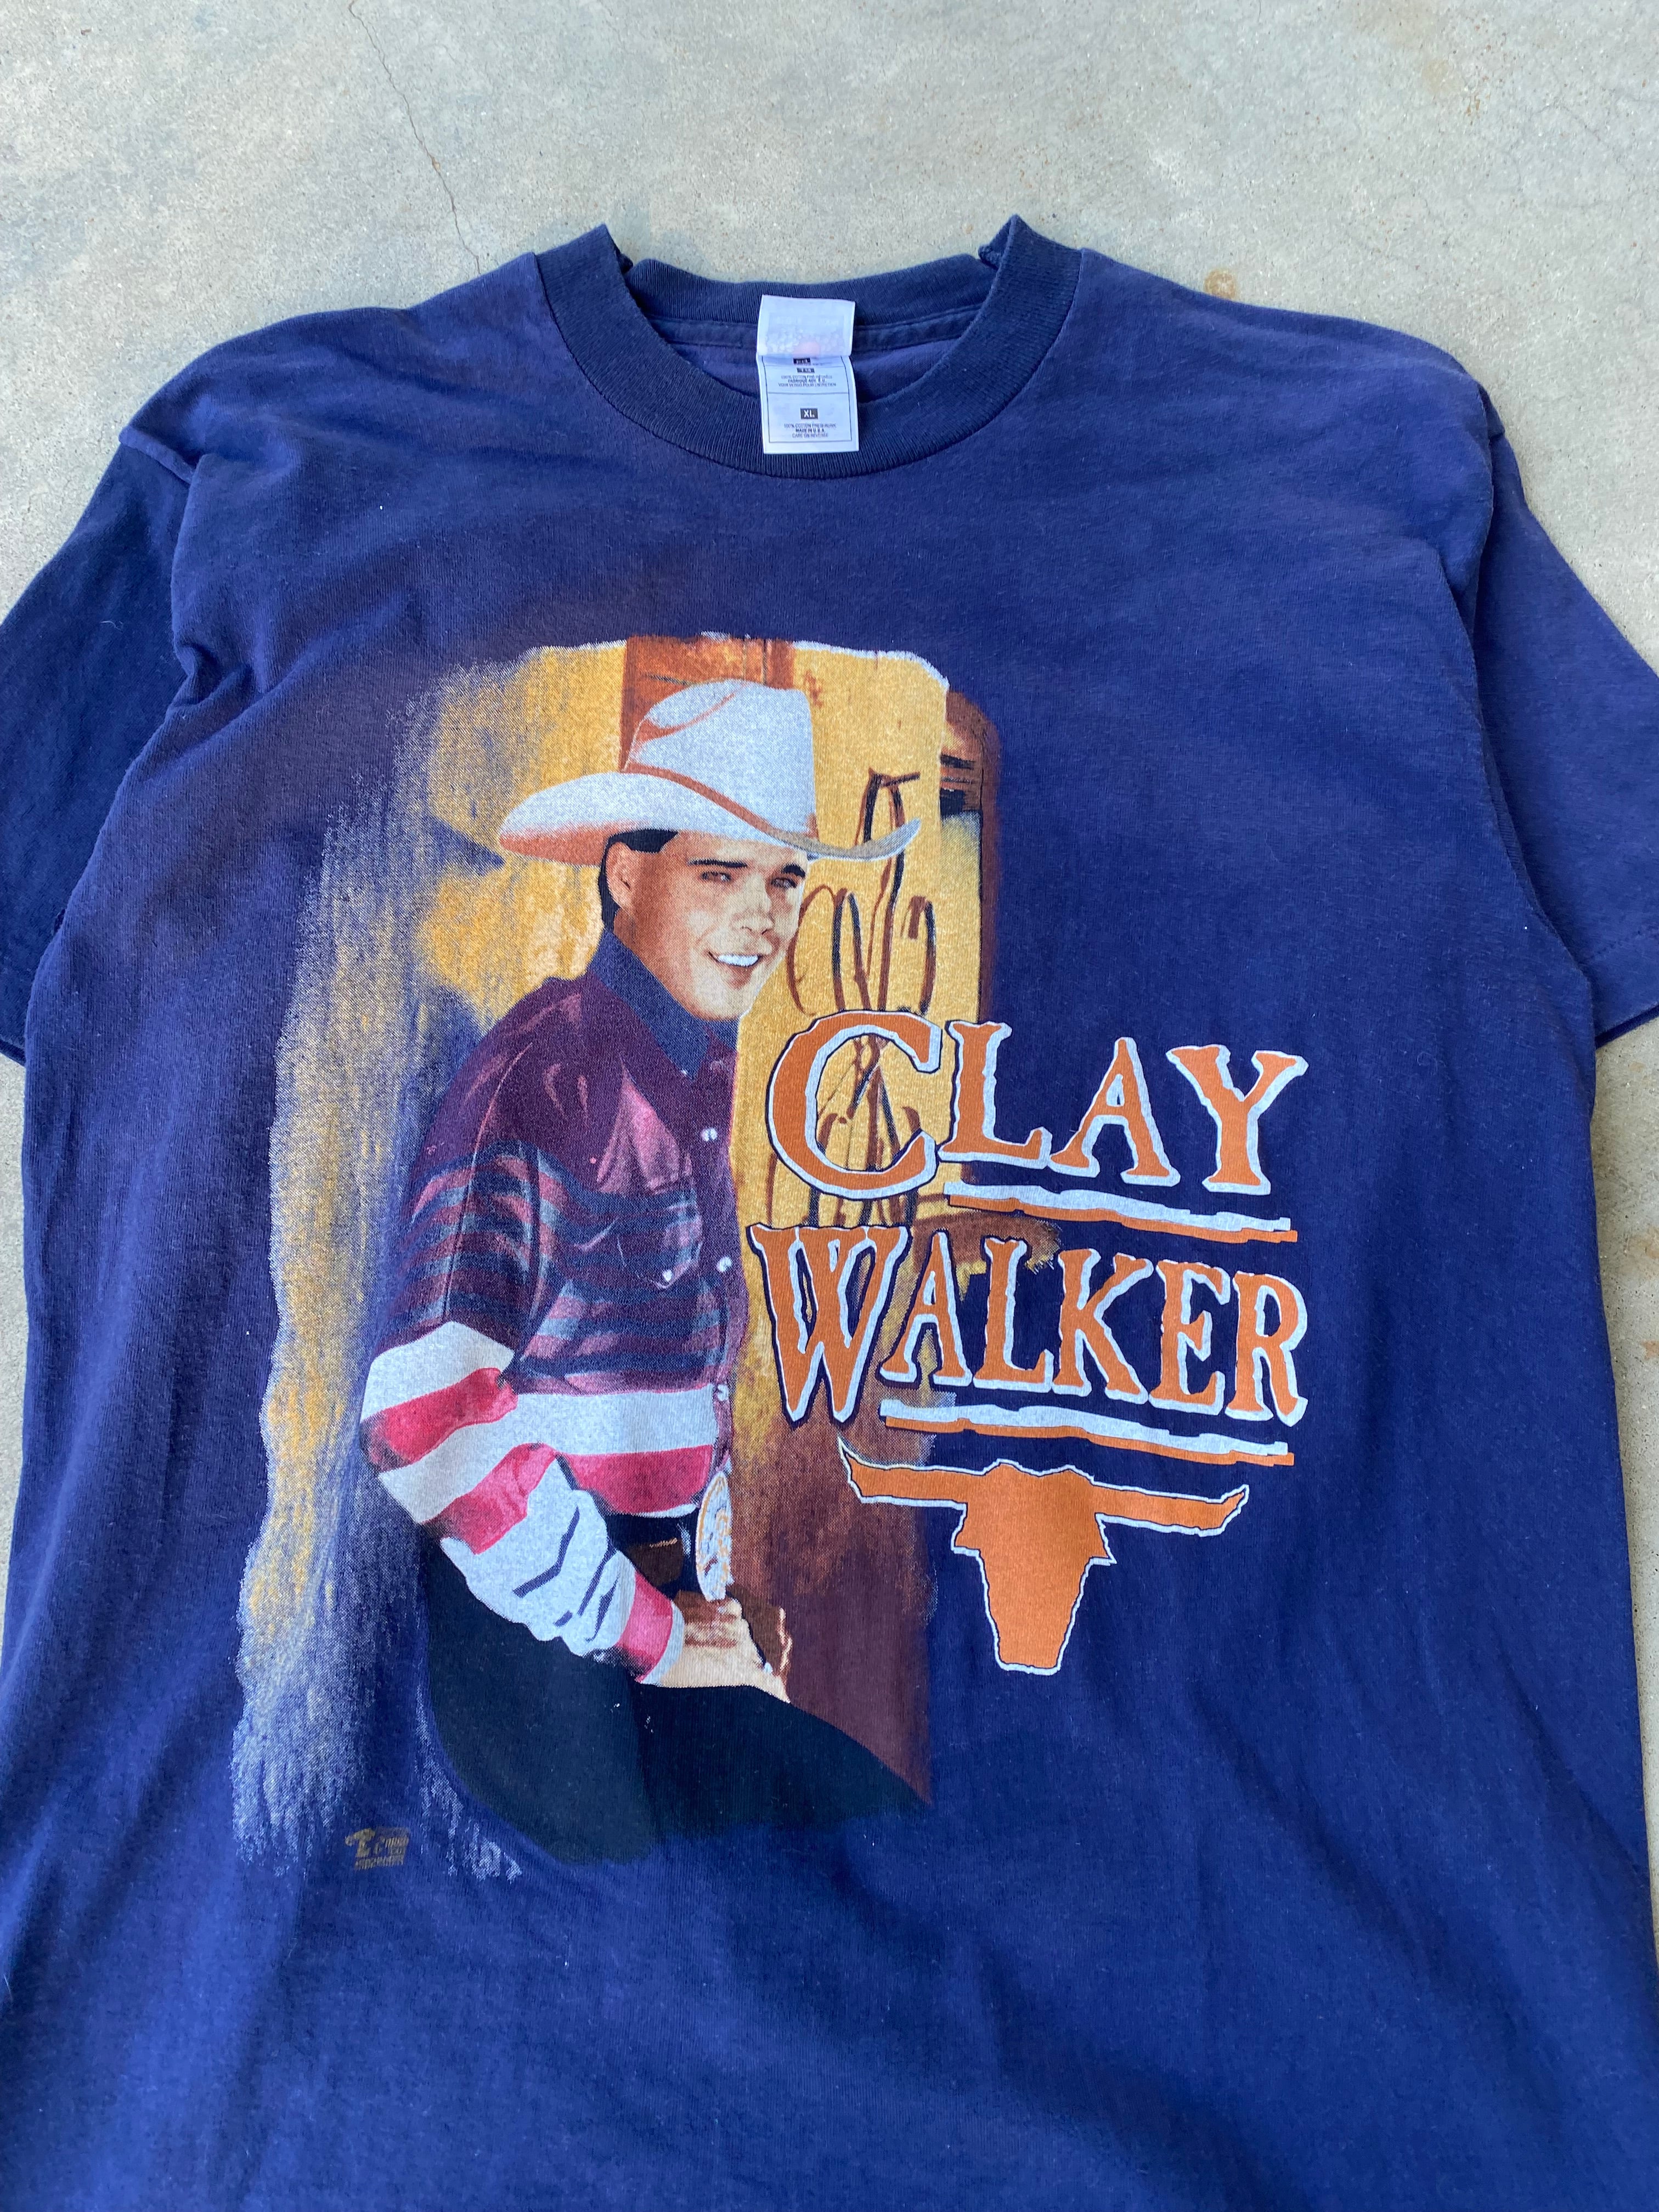 1990s Clay Walker "Hypnotize the Moon" Tour T-Shirt (L)